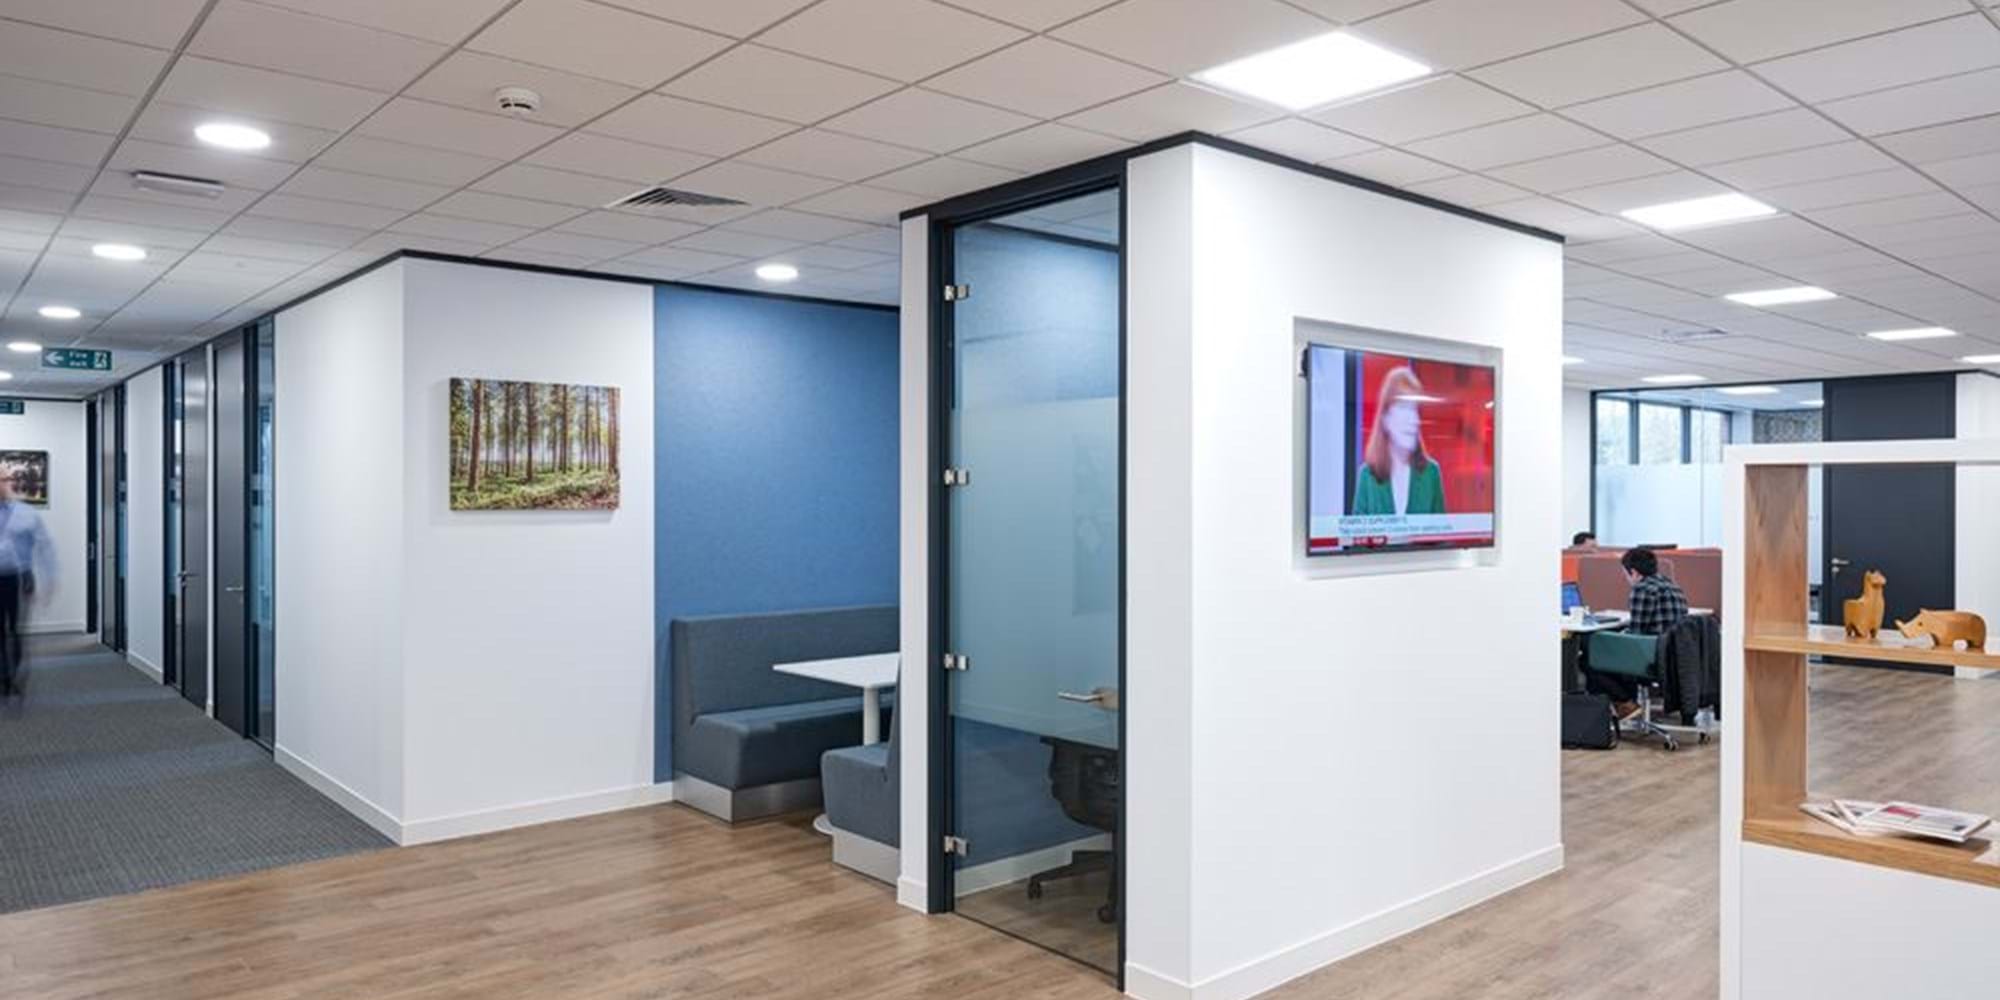 Modus Workspace office design, fit out and refurbishment - Regus Stokenchurch - Regus Gerrads Cross 05 highres sRGB.jpg